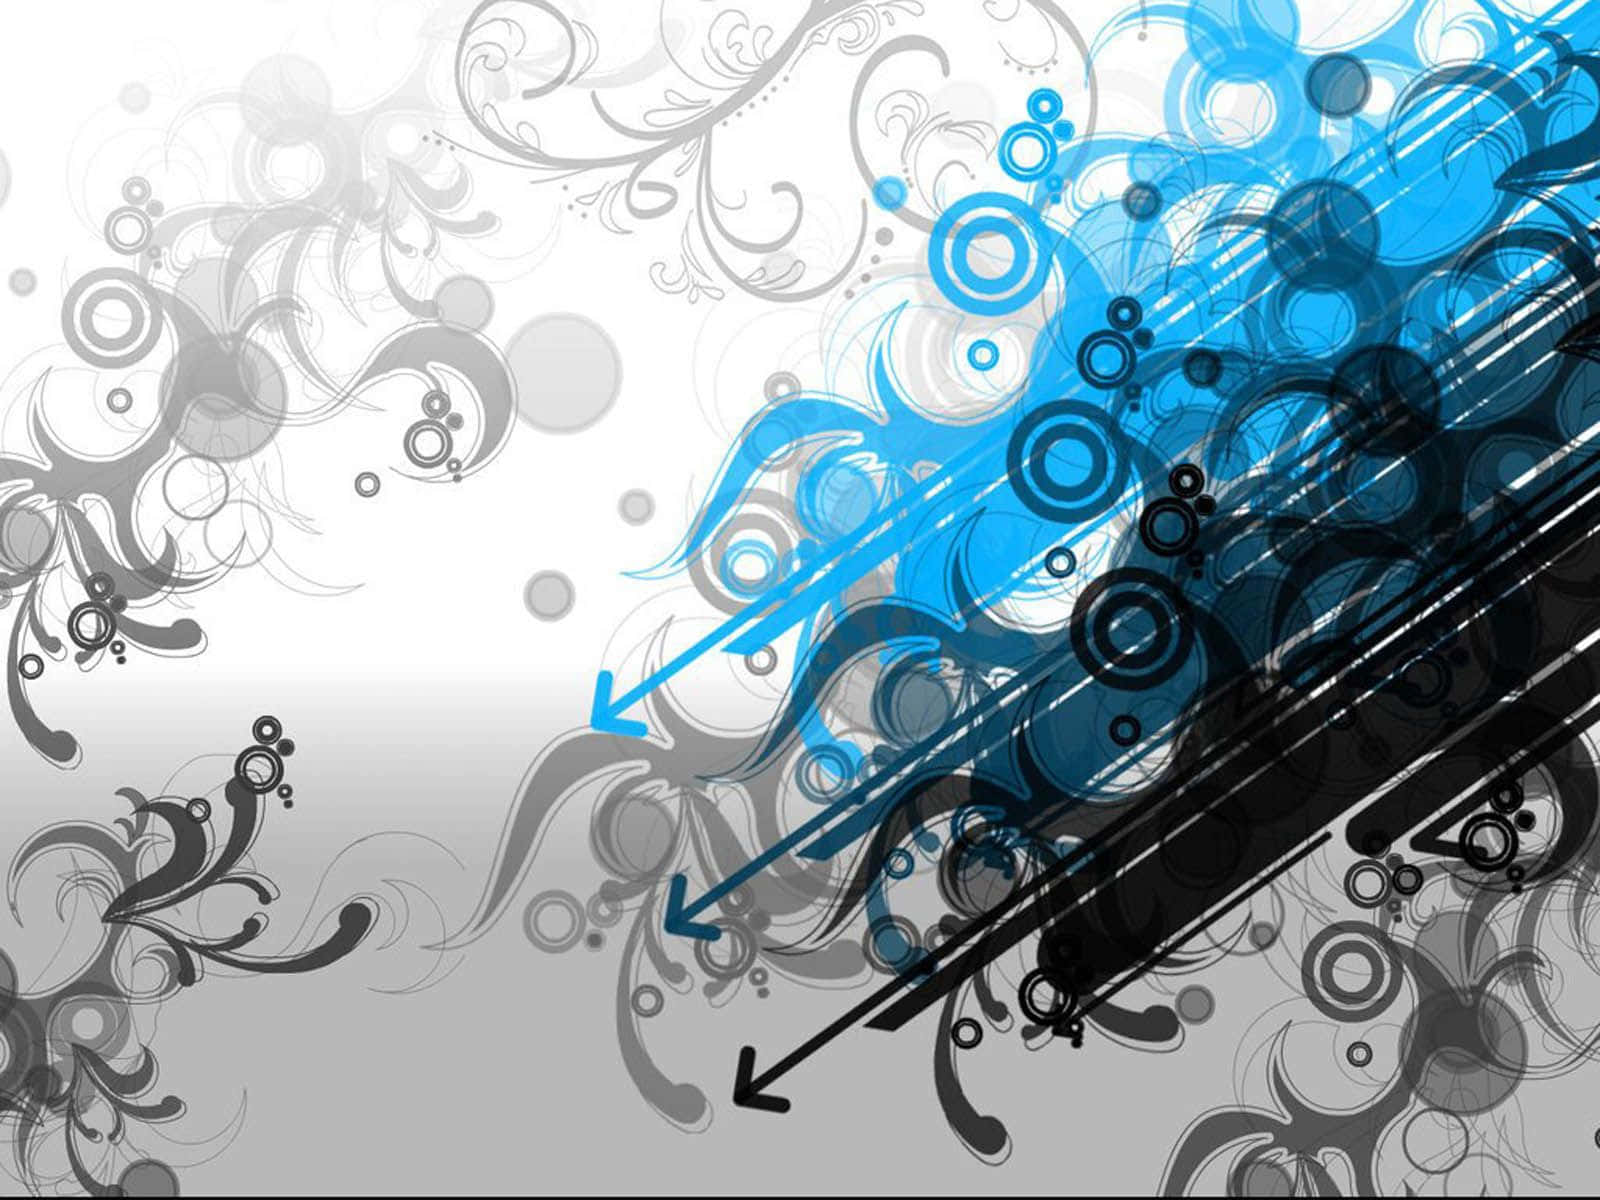 Graphic Design Pattern  Free Background Image  design graphicdesign  creative wall  Free background images Purple background images Graphic  design pattern